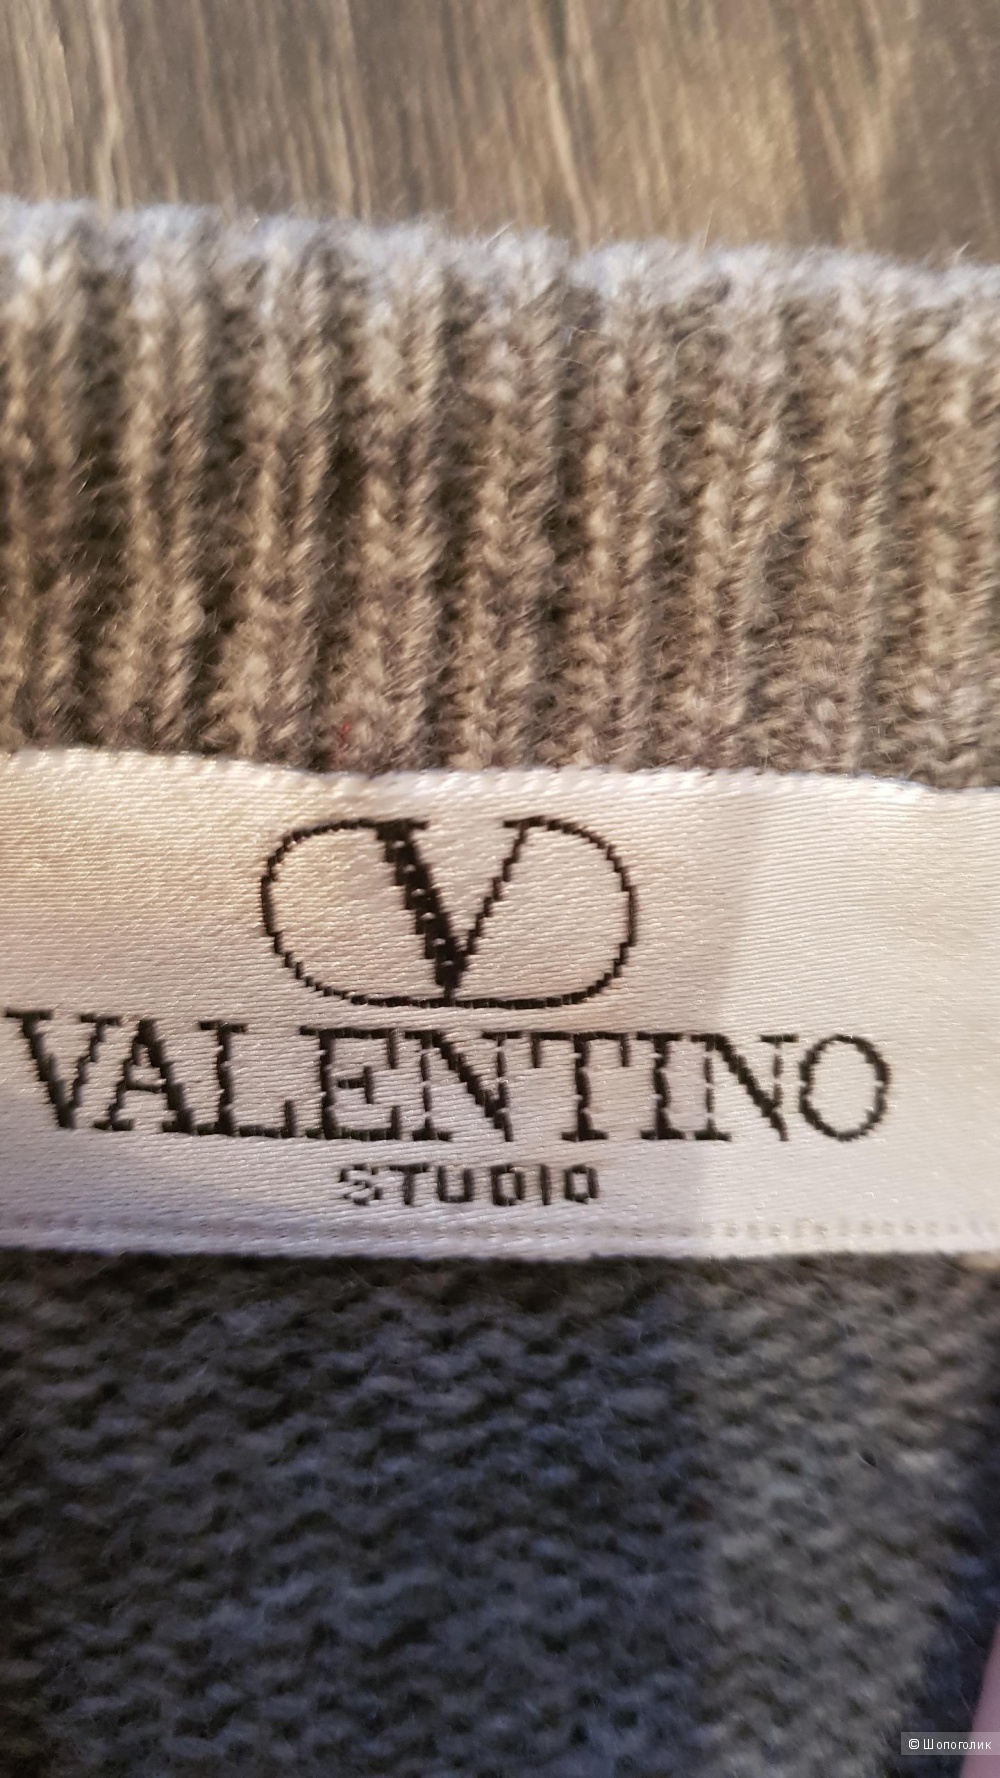 Свитер Valentino studio (52-54)